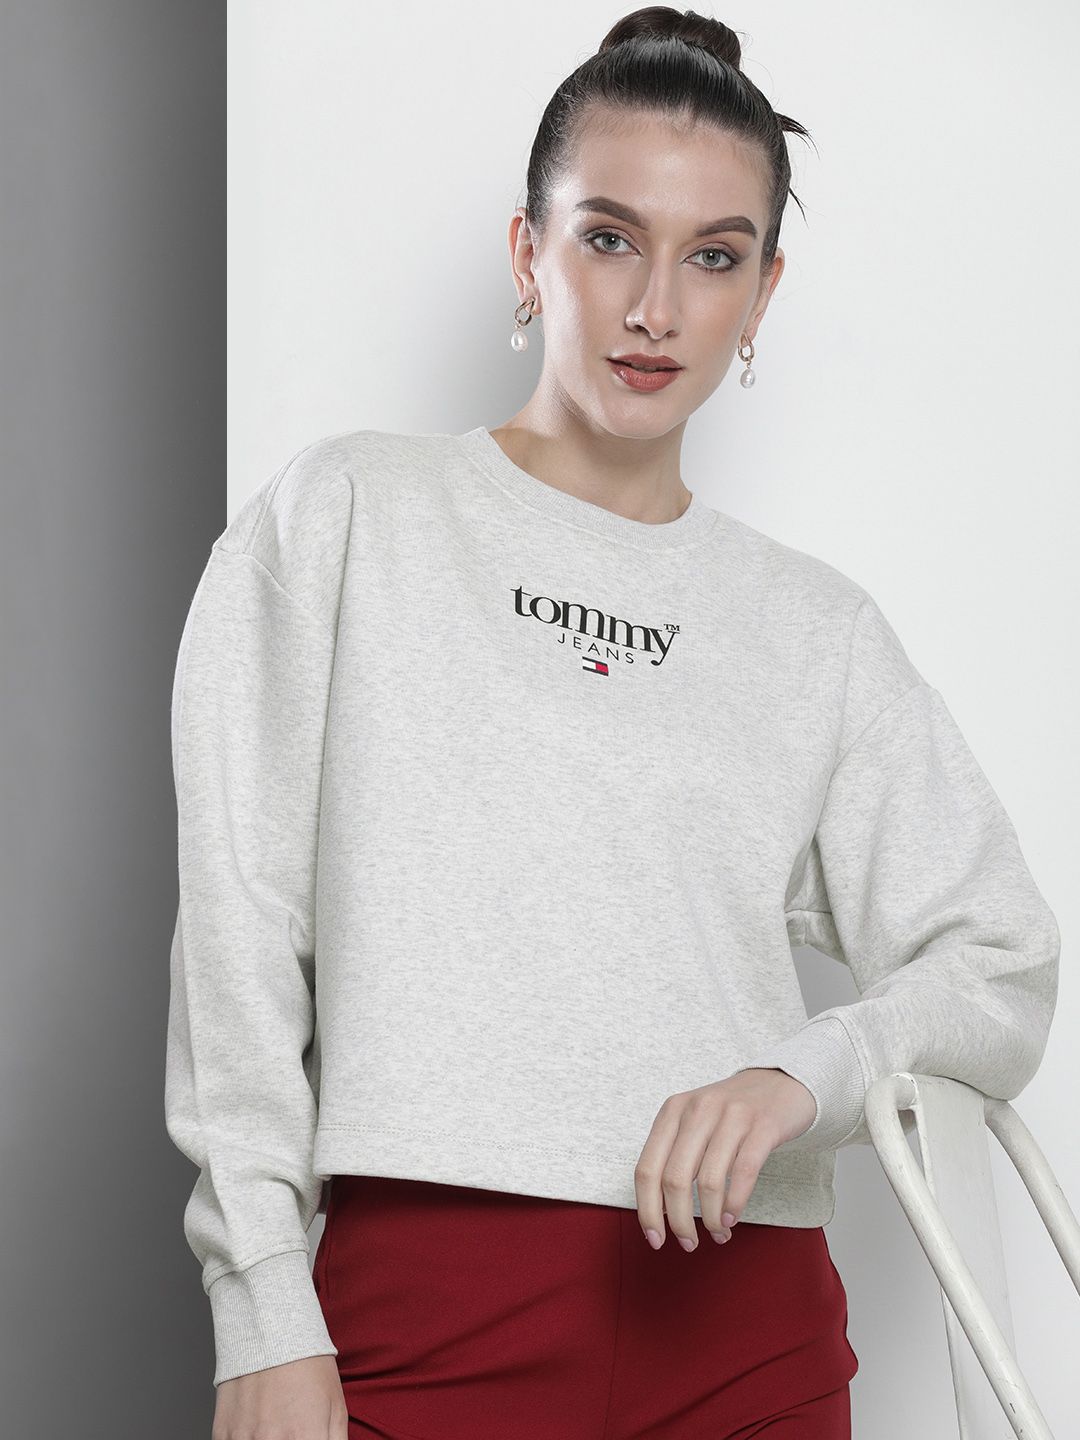 Tommy Hilfiger Women Grey Melange Printed Sweatshirt Price in India